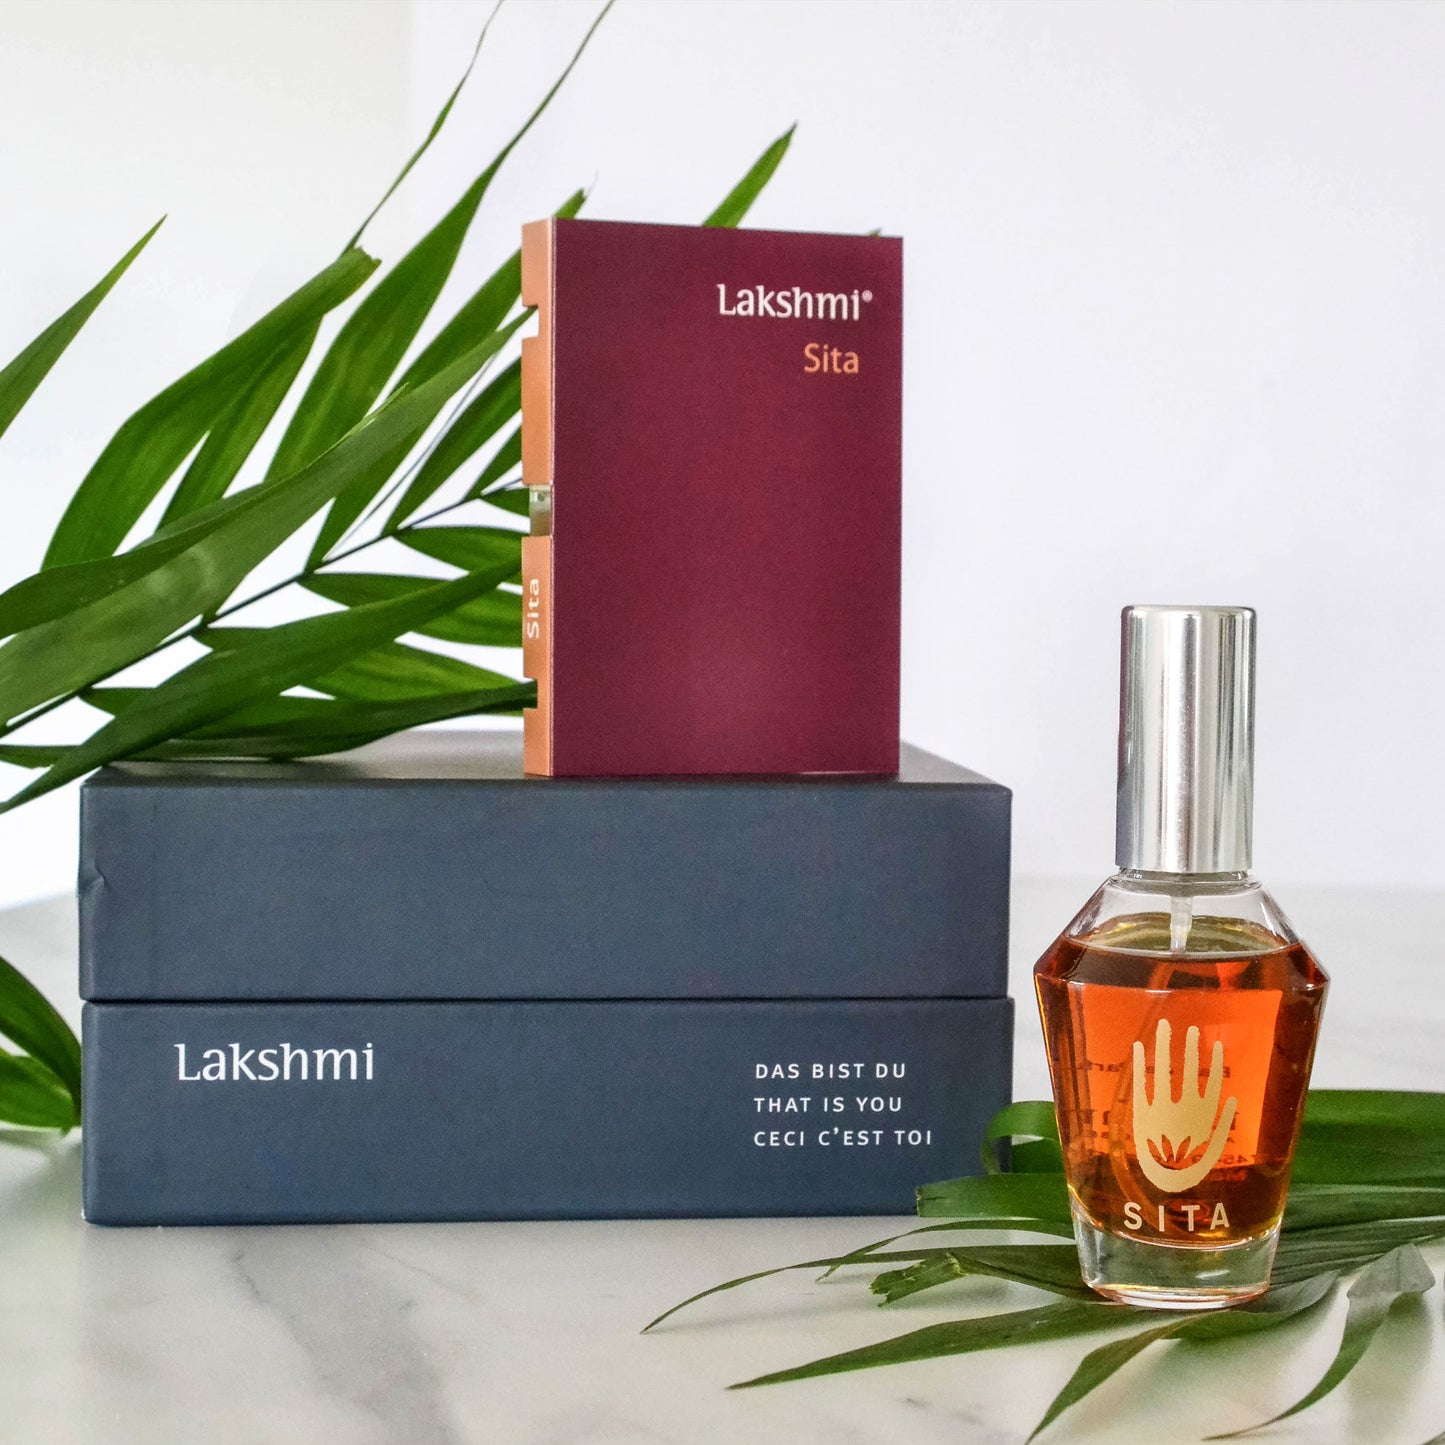 naturparfum, parfum naturkosmetik, Lakshmi ayurvedische naturkosmetik, luxury parfum 